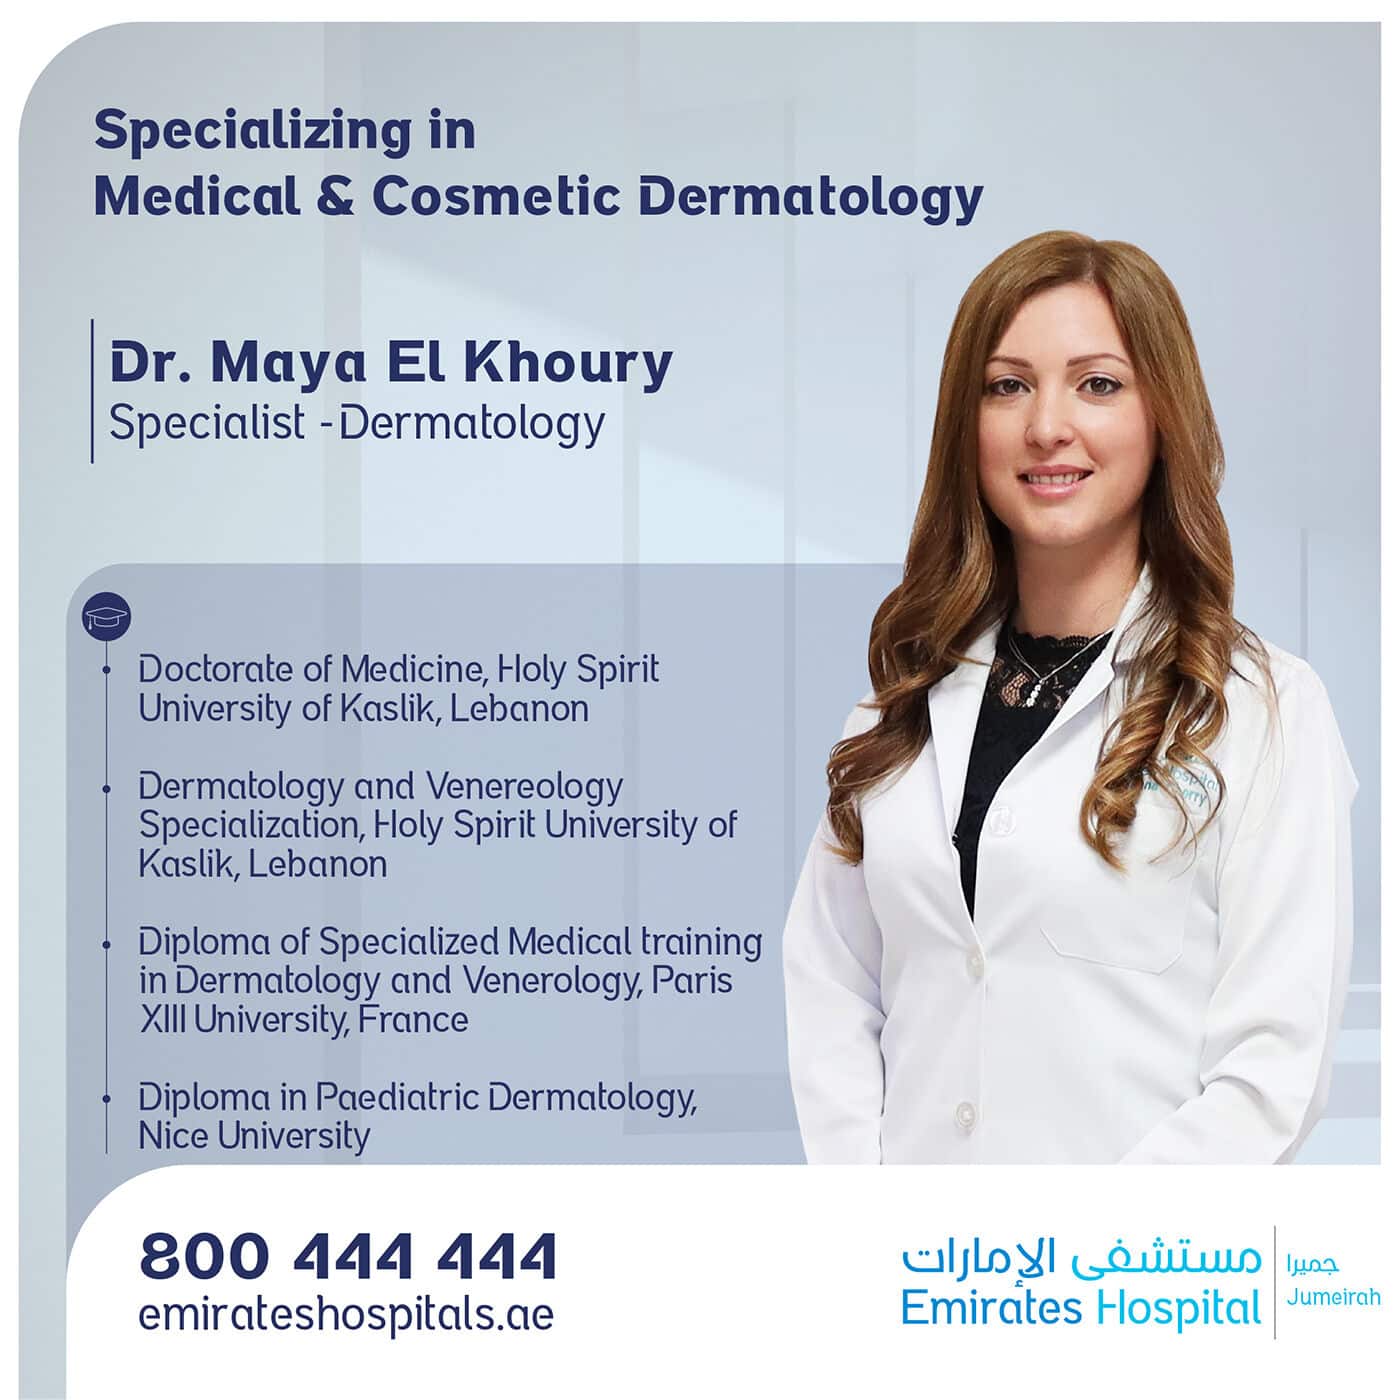 Dr. Maya El Khoury, Specialist – Dermatology Joined Emirates Hospital, Jumeirah